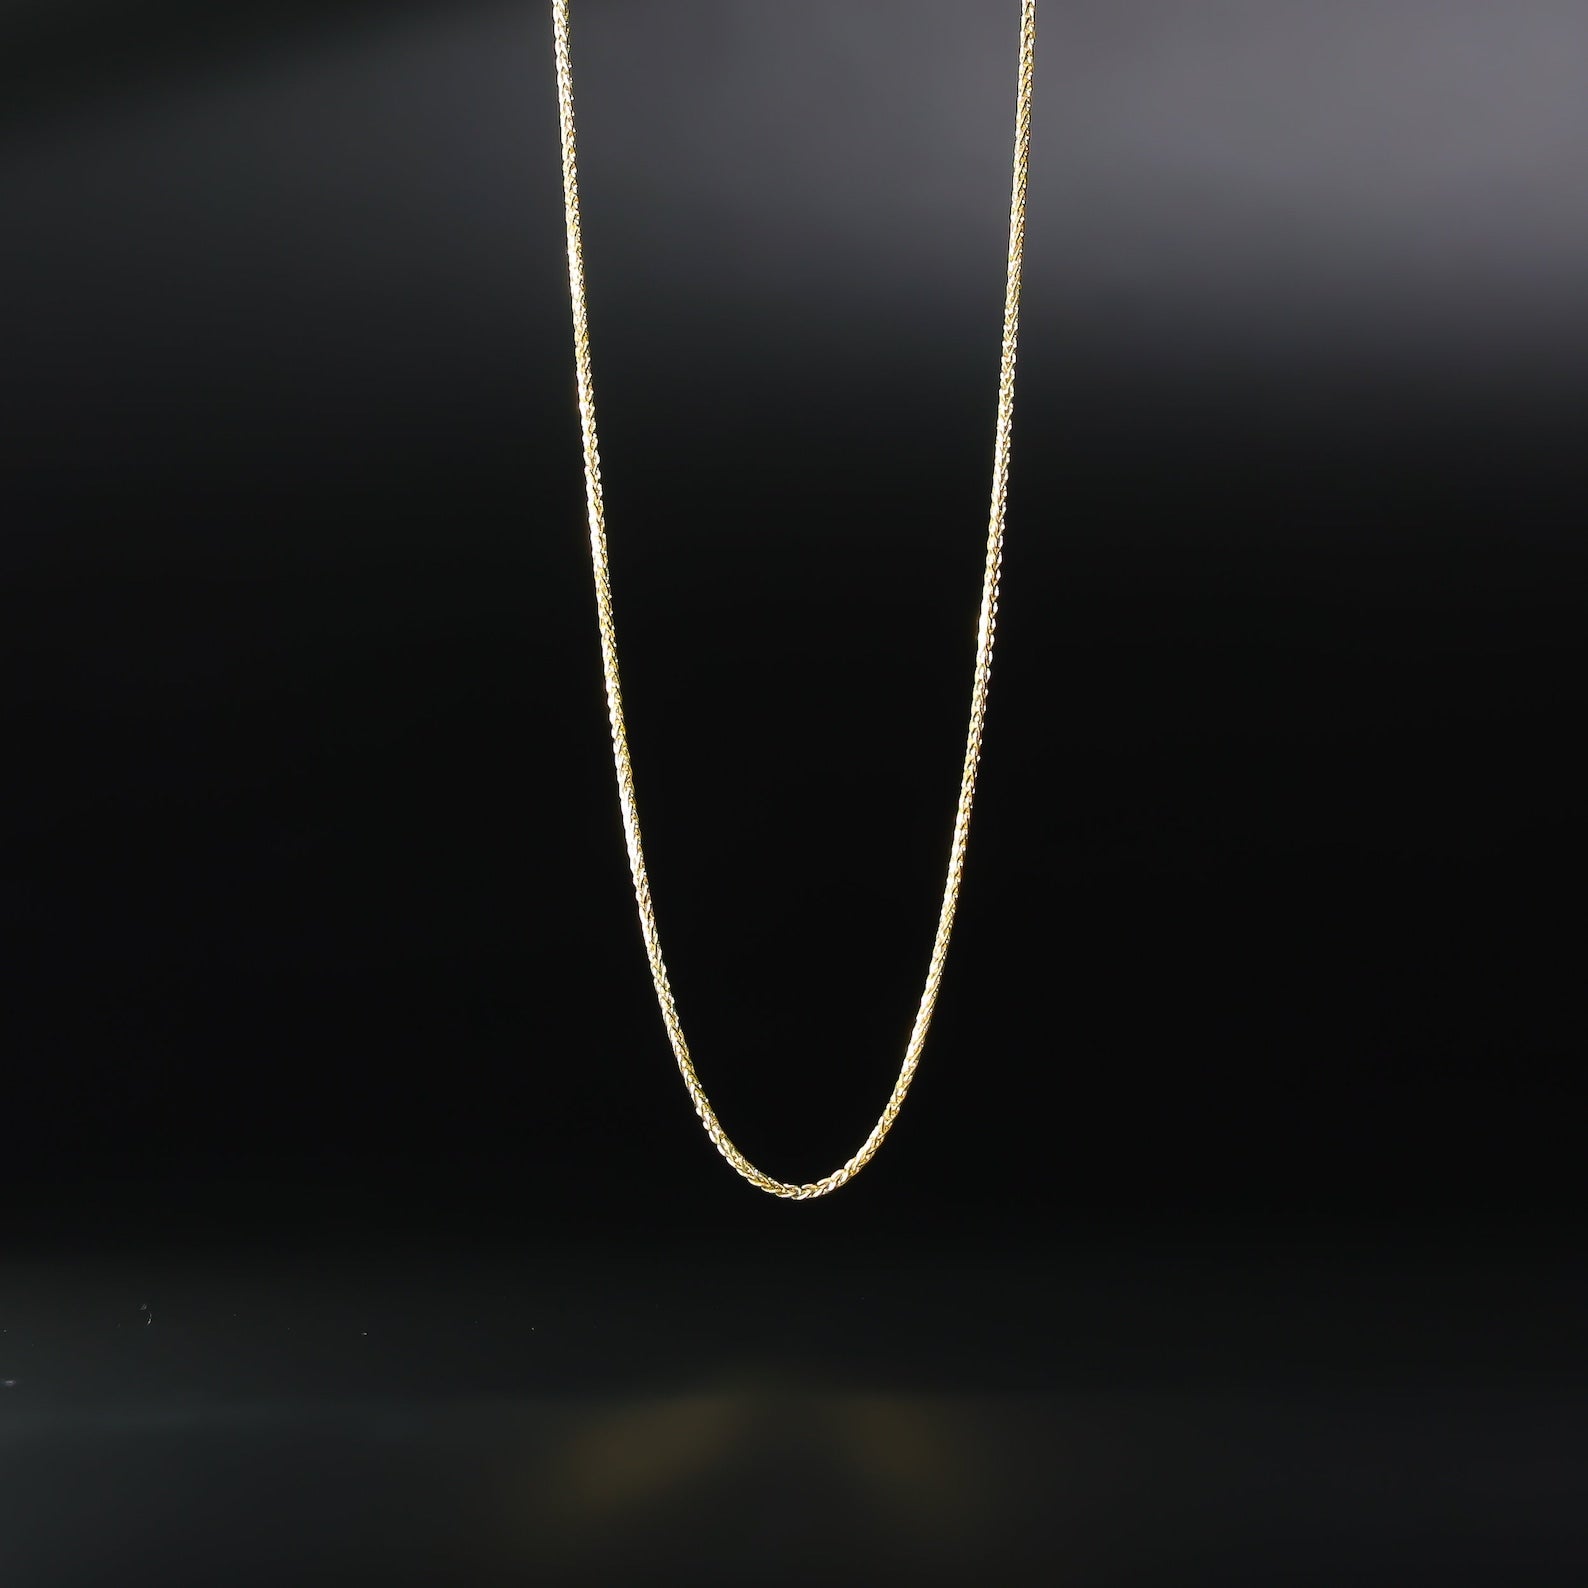 Gold Dainty Diamond Cut Cross Pendant Model-1043 - Charlie & Co. Jewelry